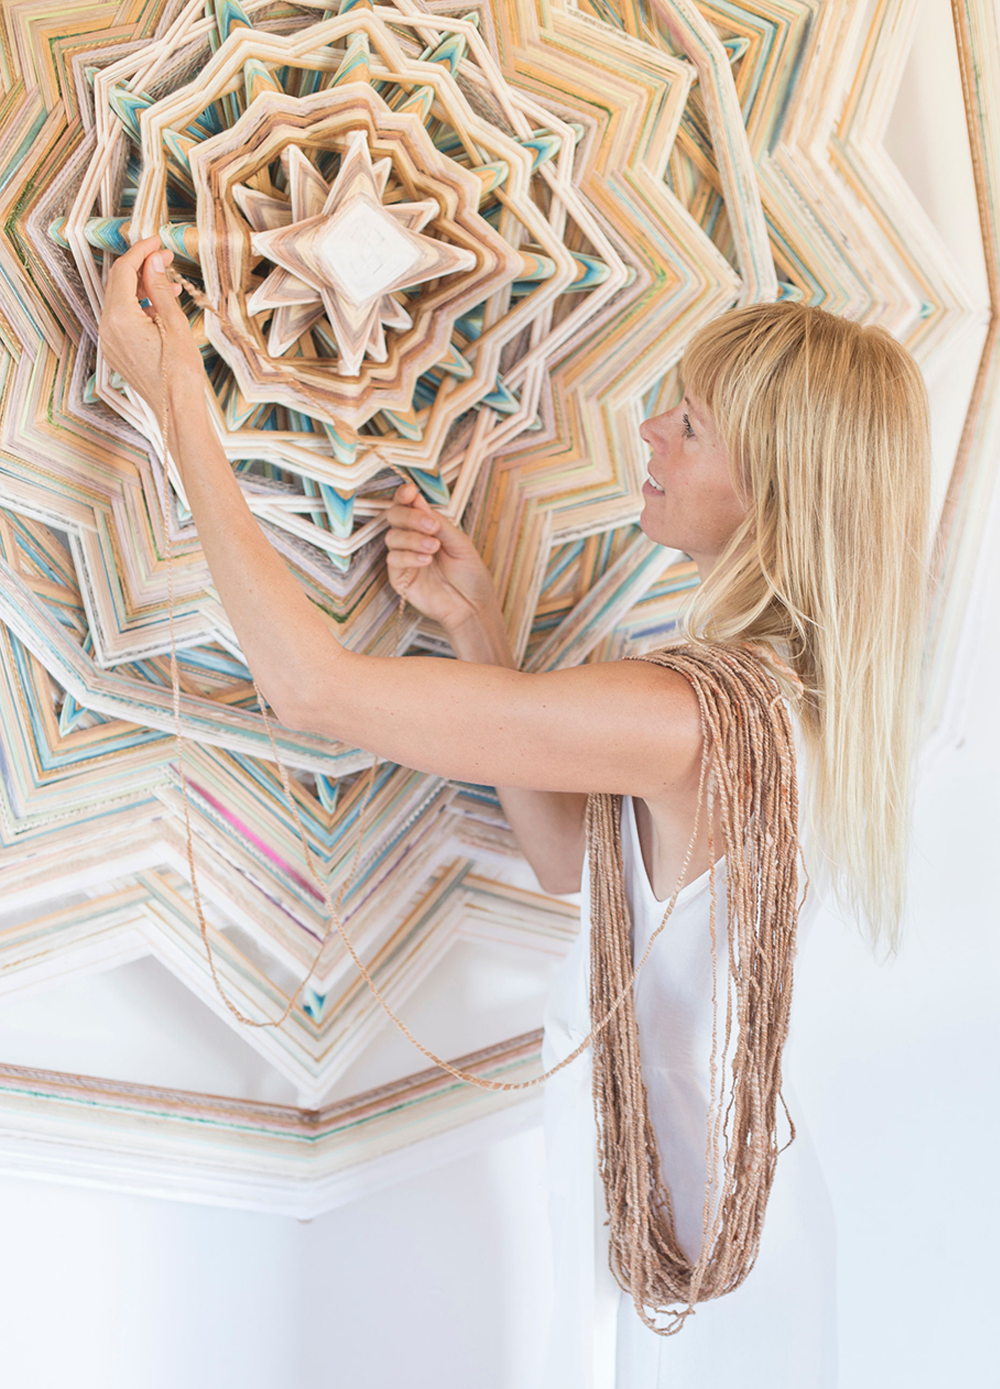 cloe collette weaving fiber art biography